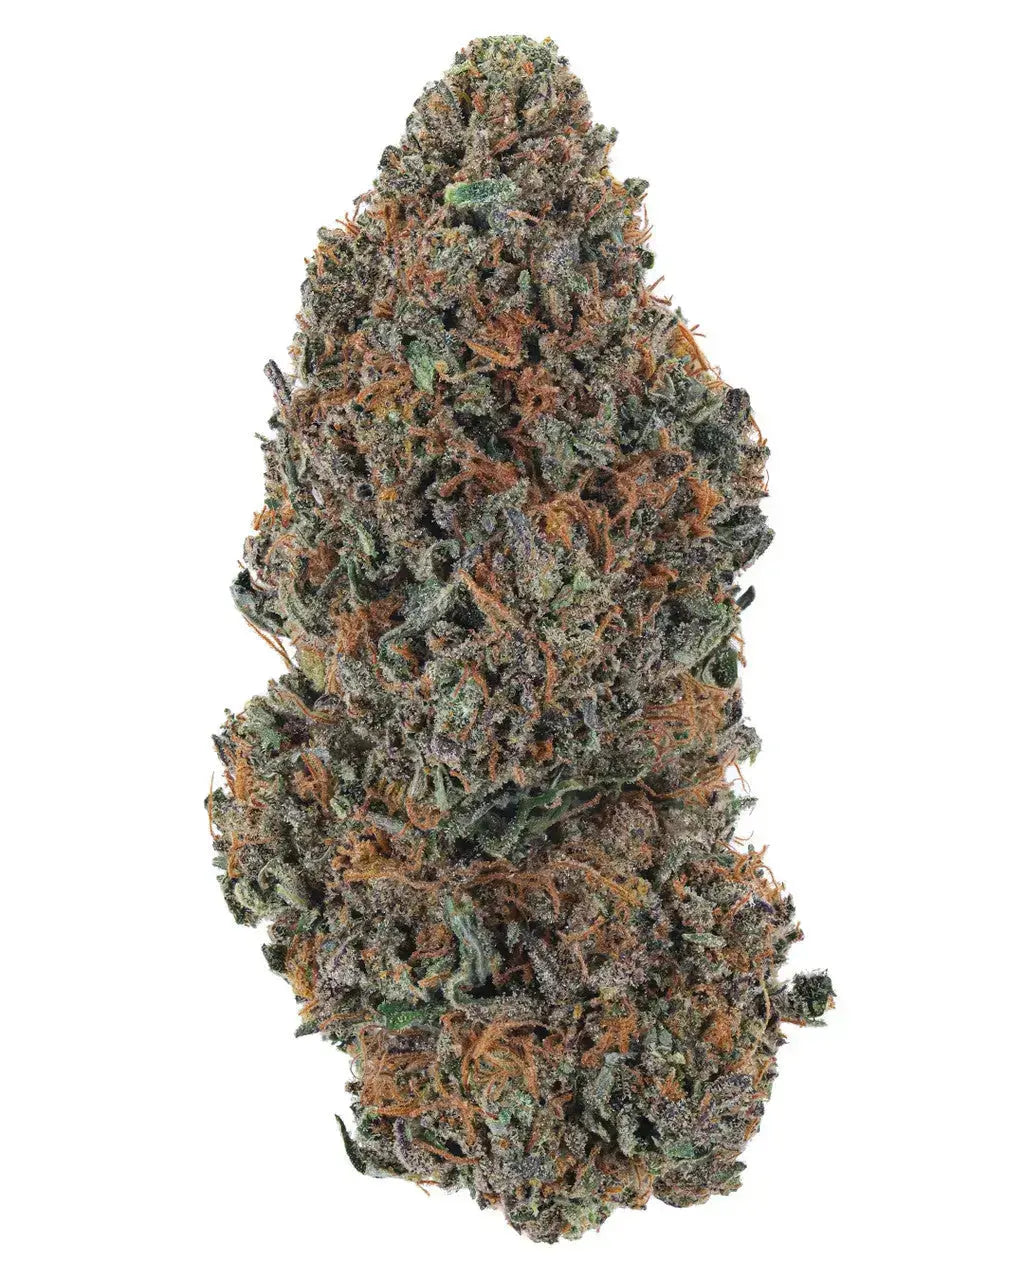 GG4 Indoor Premium Cannabis Flower Siesta G Dispensary